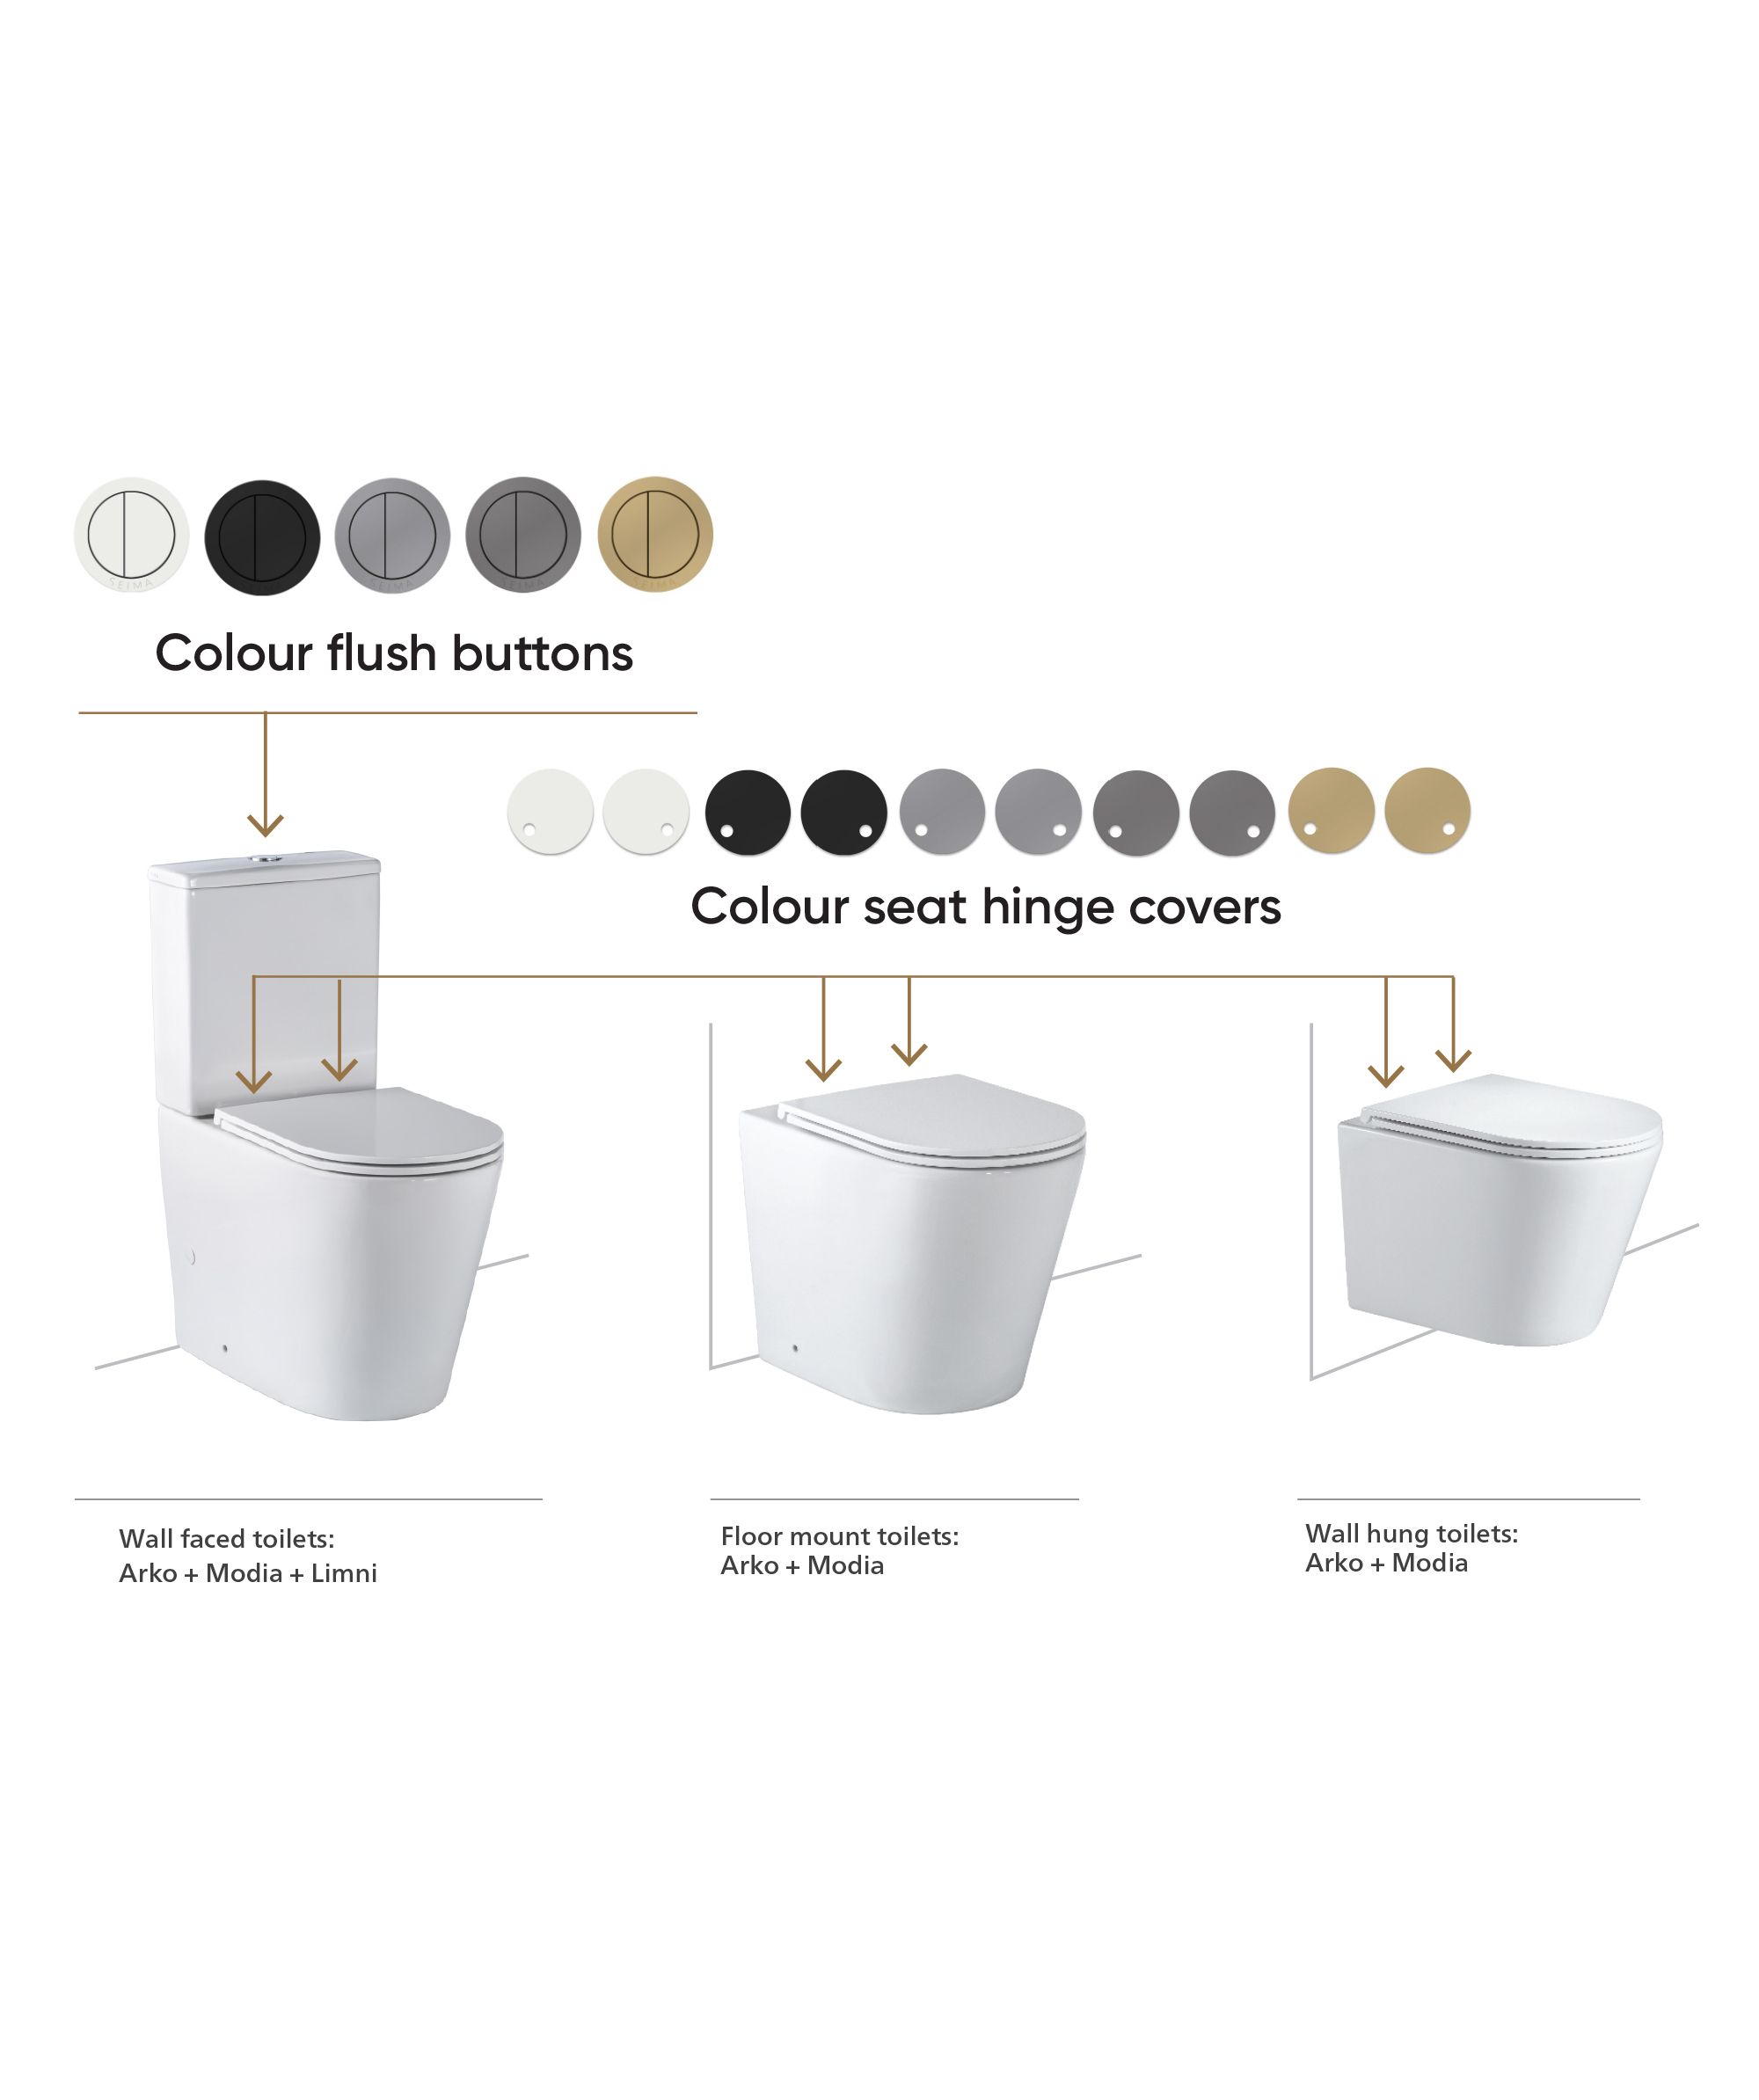 Toilet Colour - Colour Seat Hinge Covers for Arko+Modia+Limni